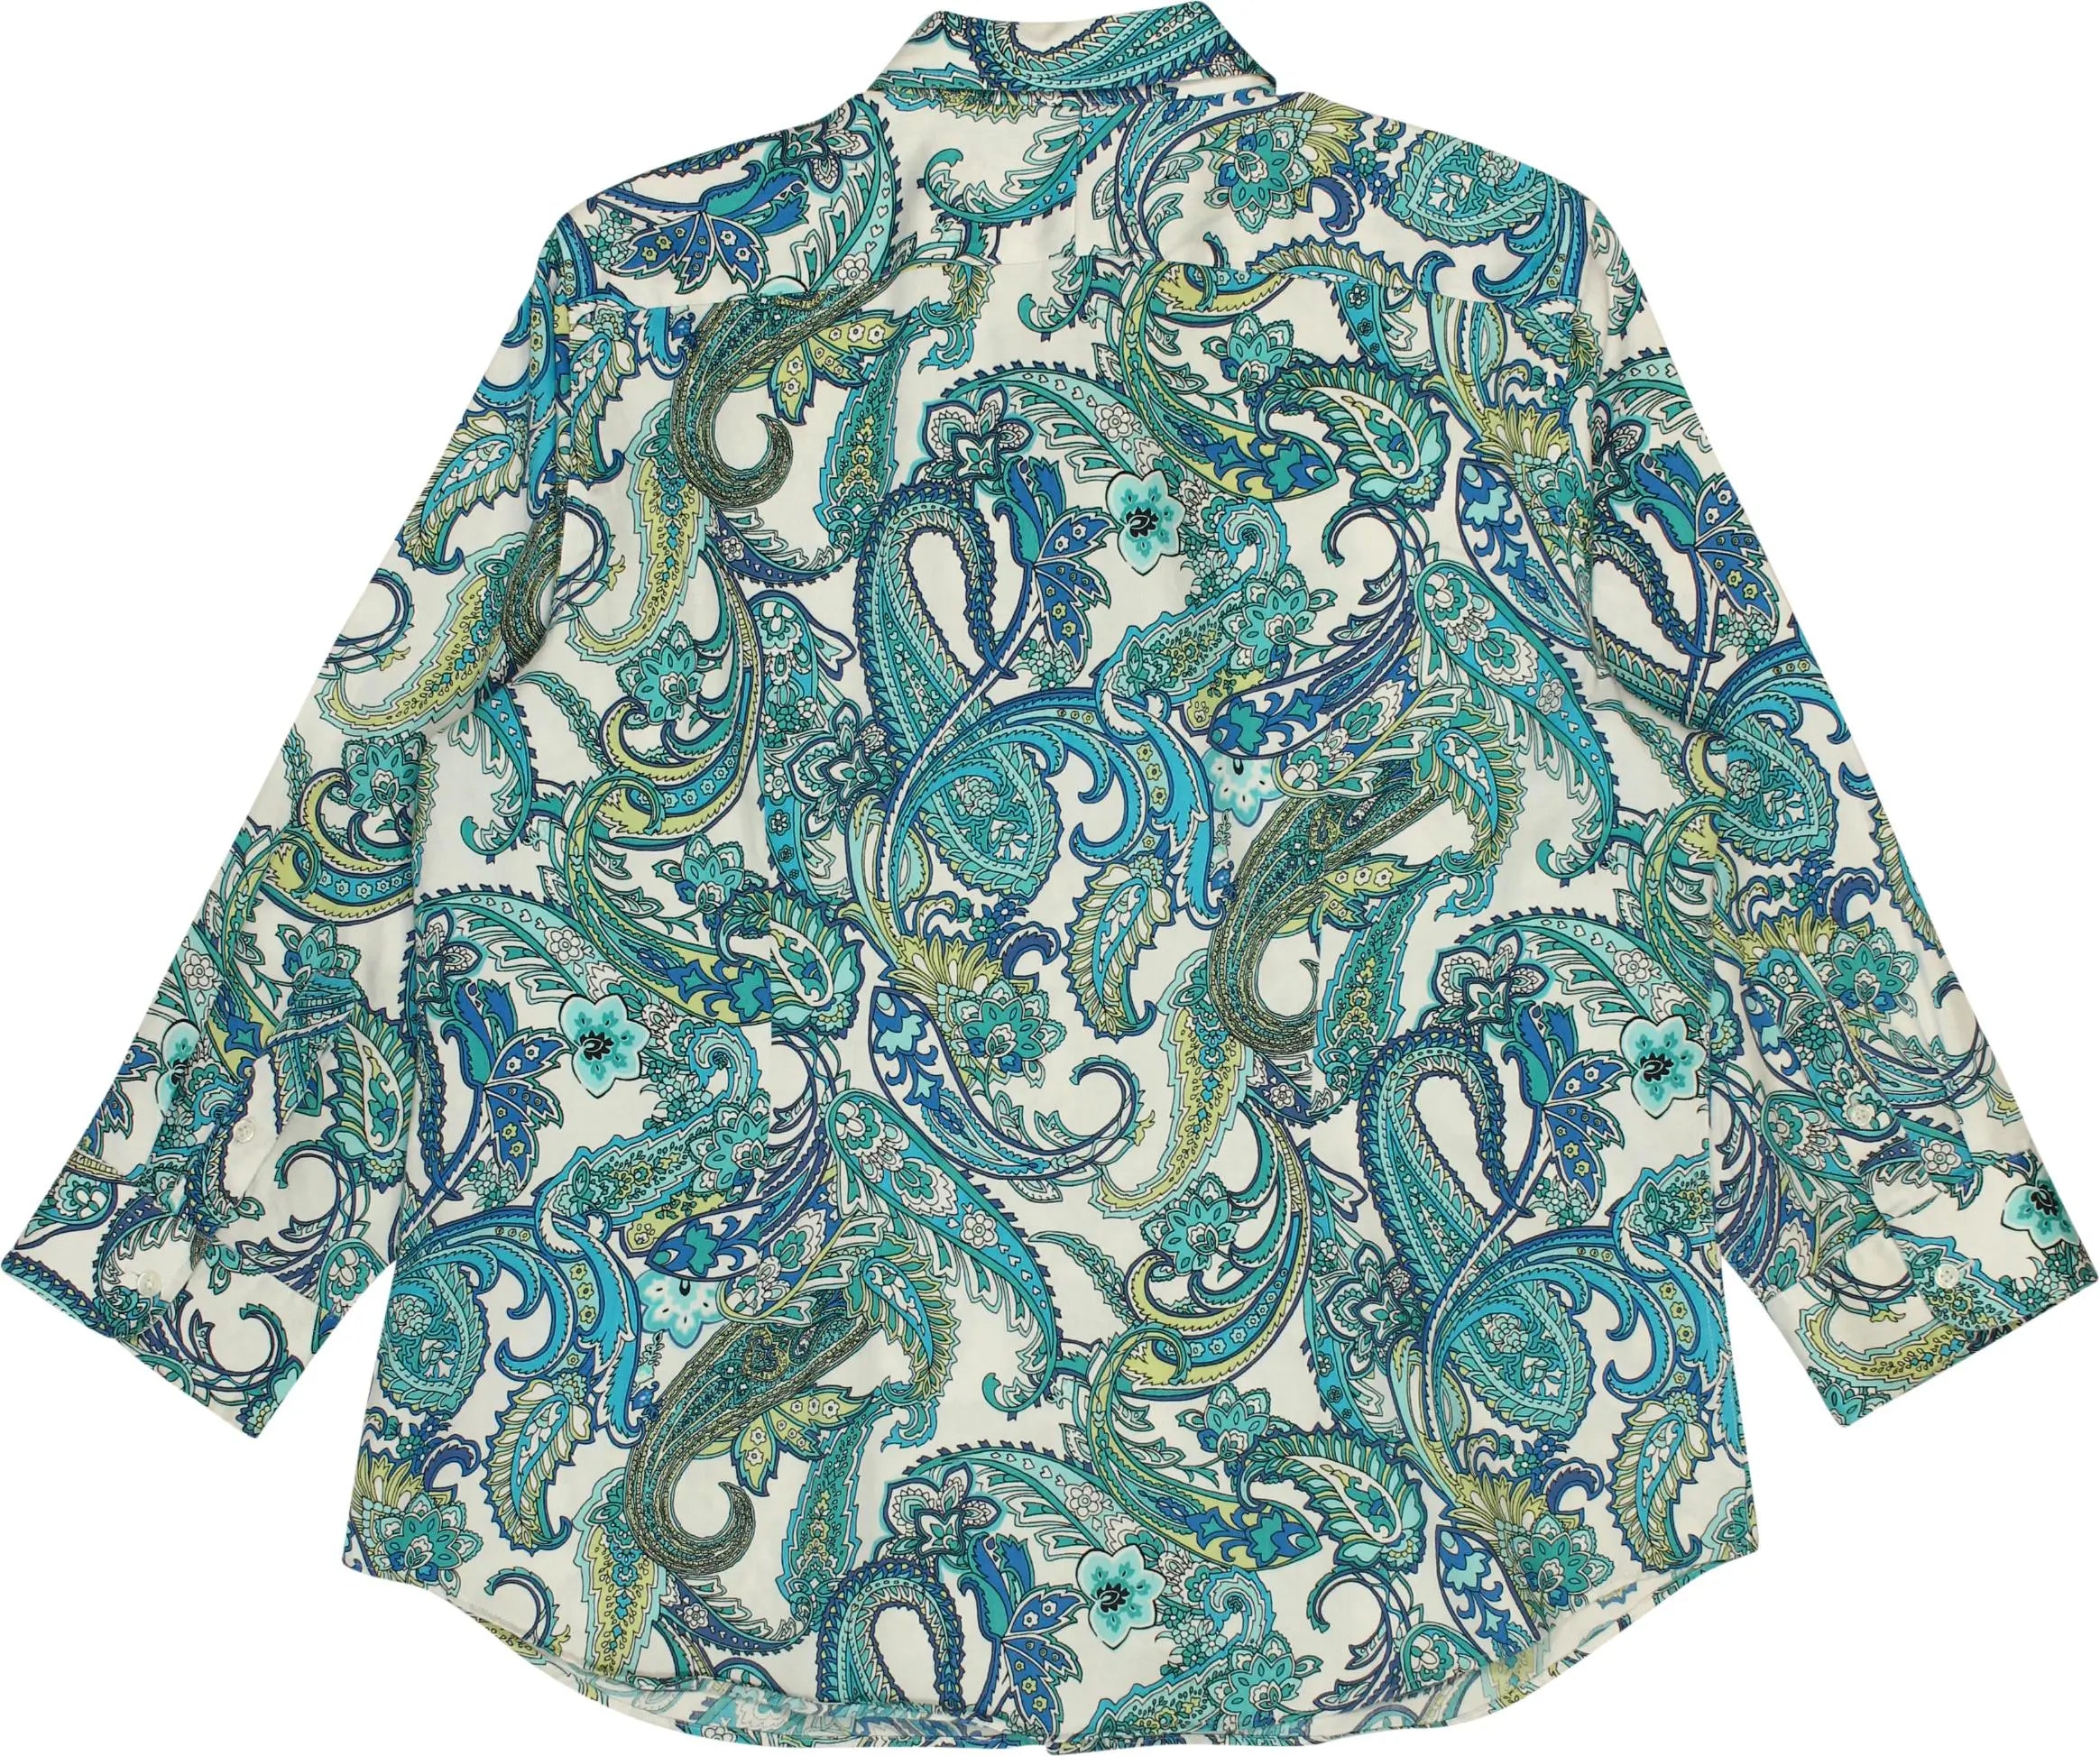 Chaps Ralph Lauren - Paisley Blouse- ThriftTale.com - Vintage and second handclothing